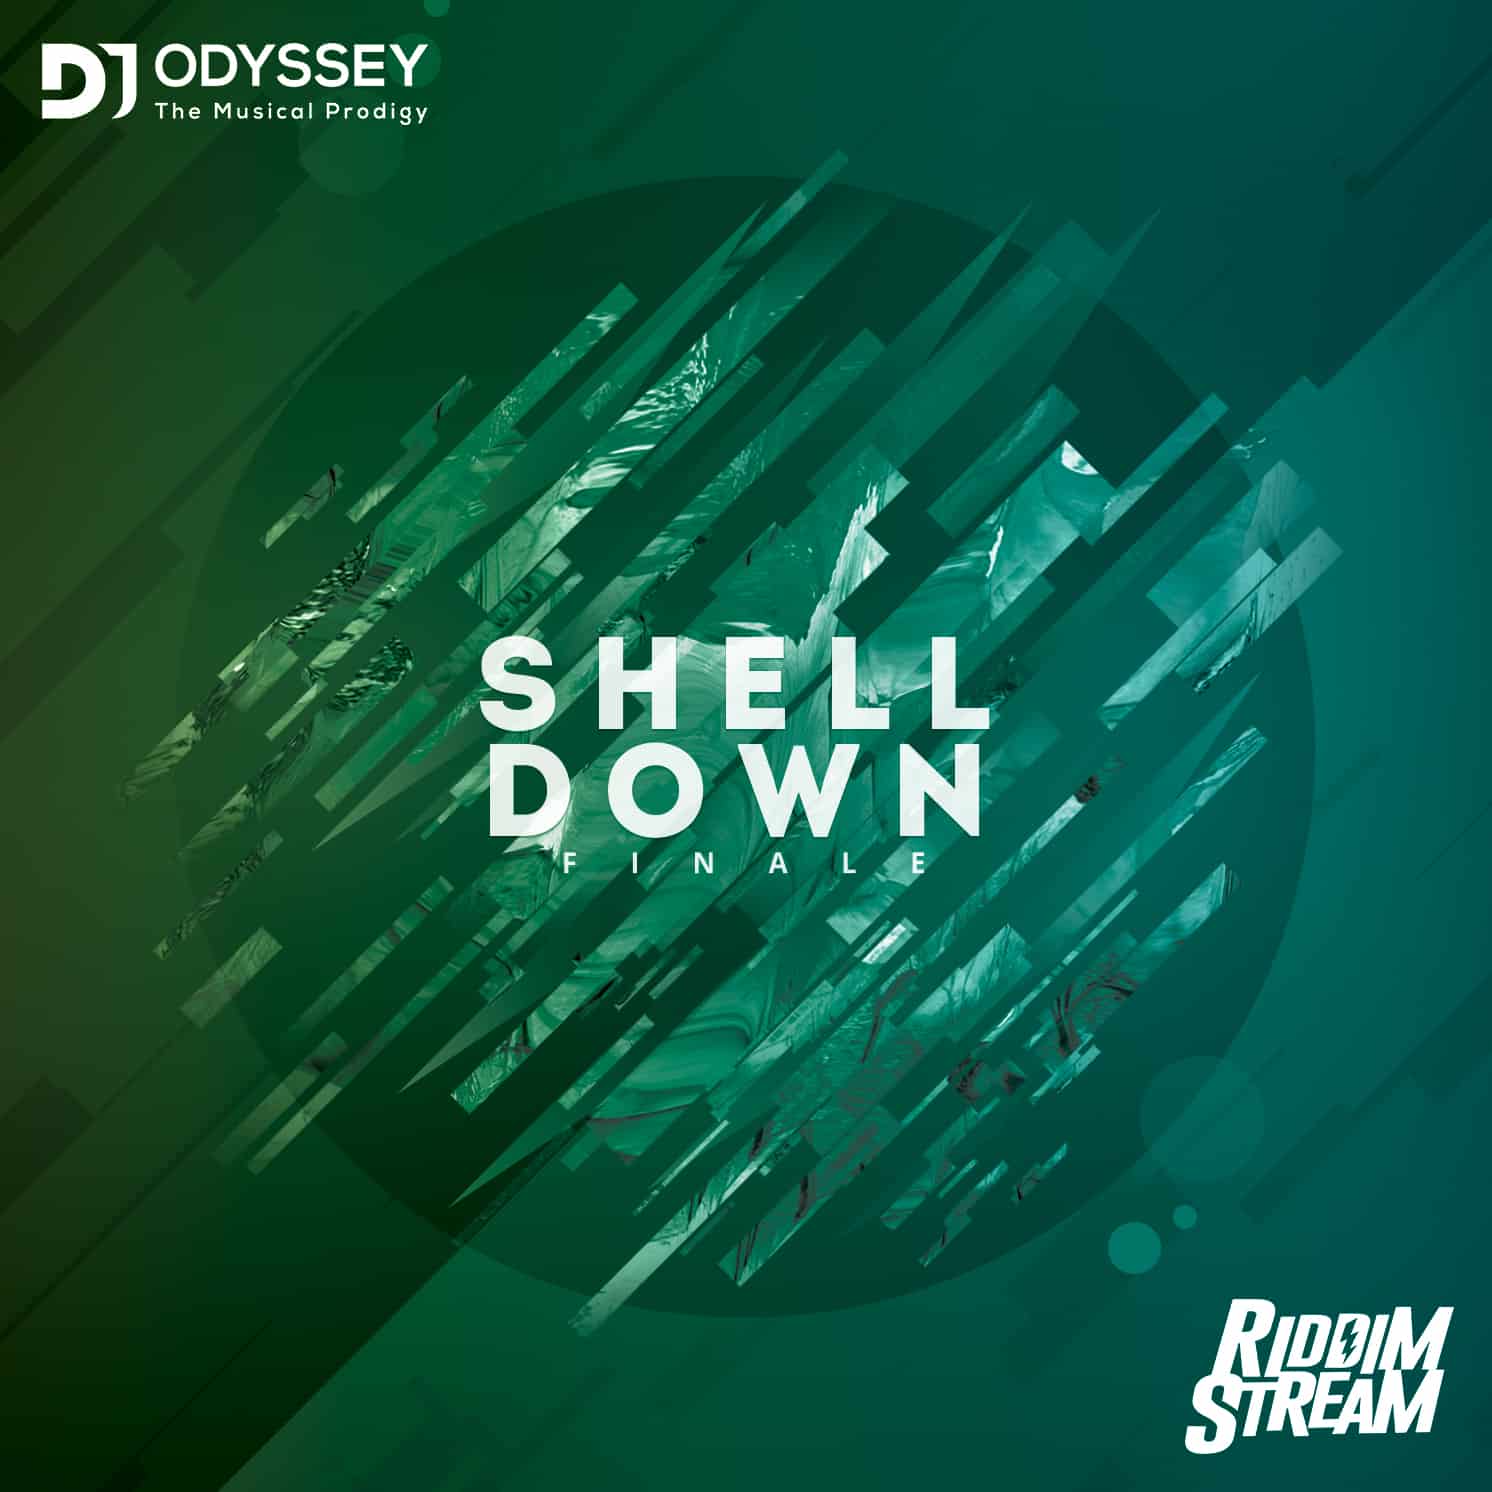 DJ Odyssey - Shell Down Finale